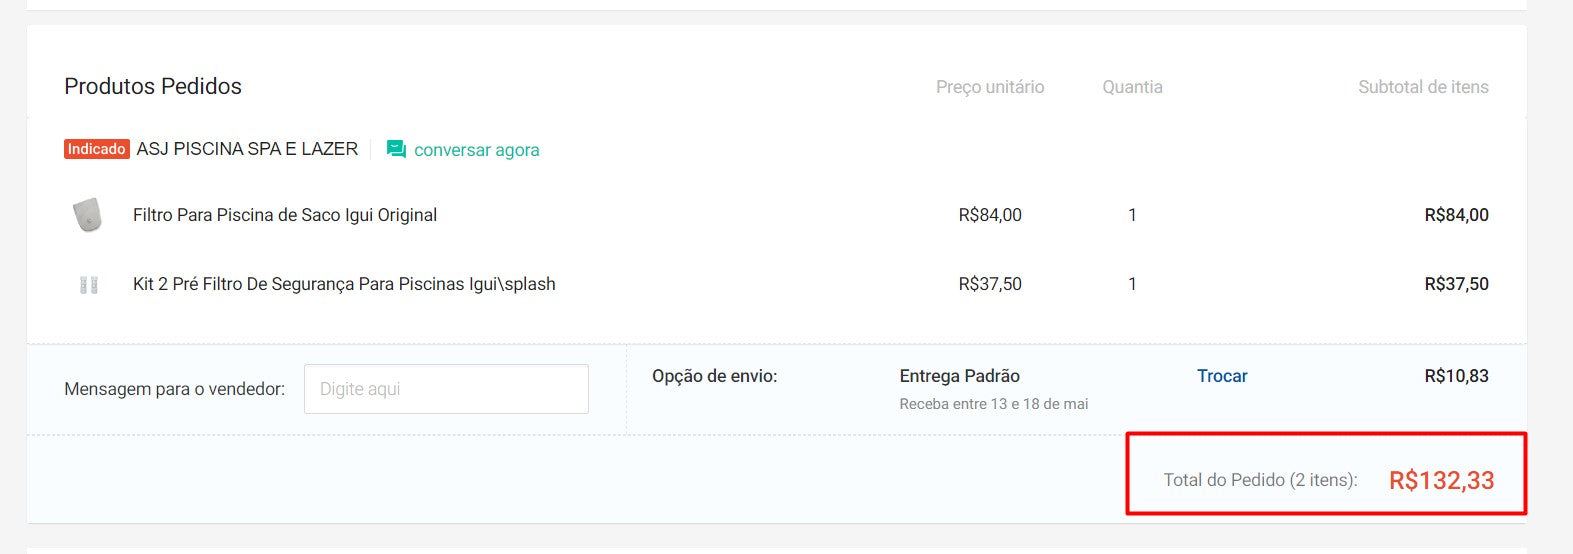 Personal shopper | Acquista dal Brasile - Gioco Medici - 2 unità (DDP)